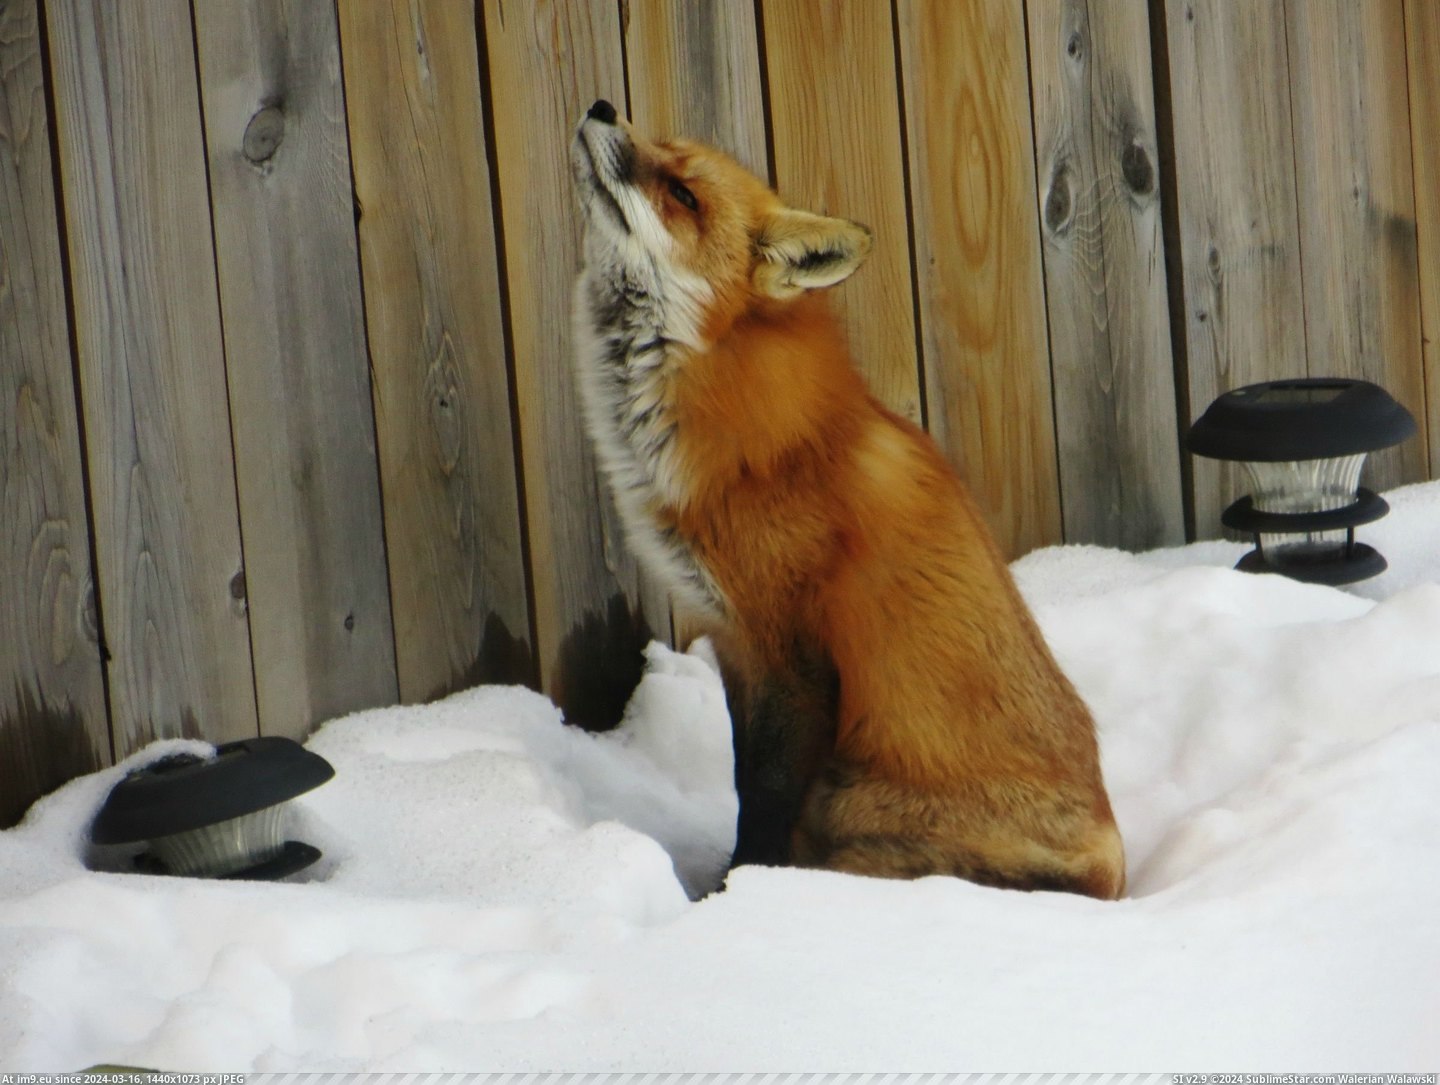 #Red #Canada #Alberta #Backyard #Fox #Sleeping [Pics] Red fox sleeping in my backyard! Alberta, Canada. 3 Pic. (Bild von album My r/PICS favs))